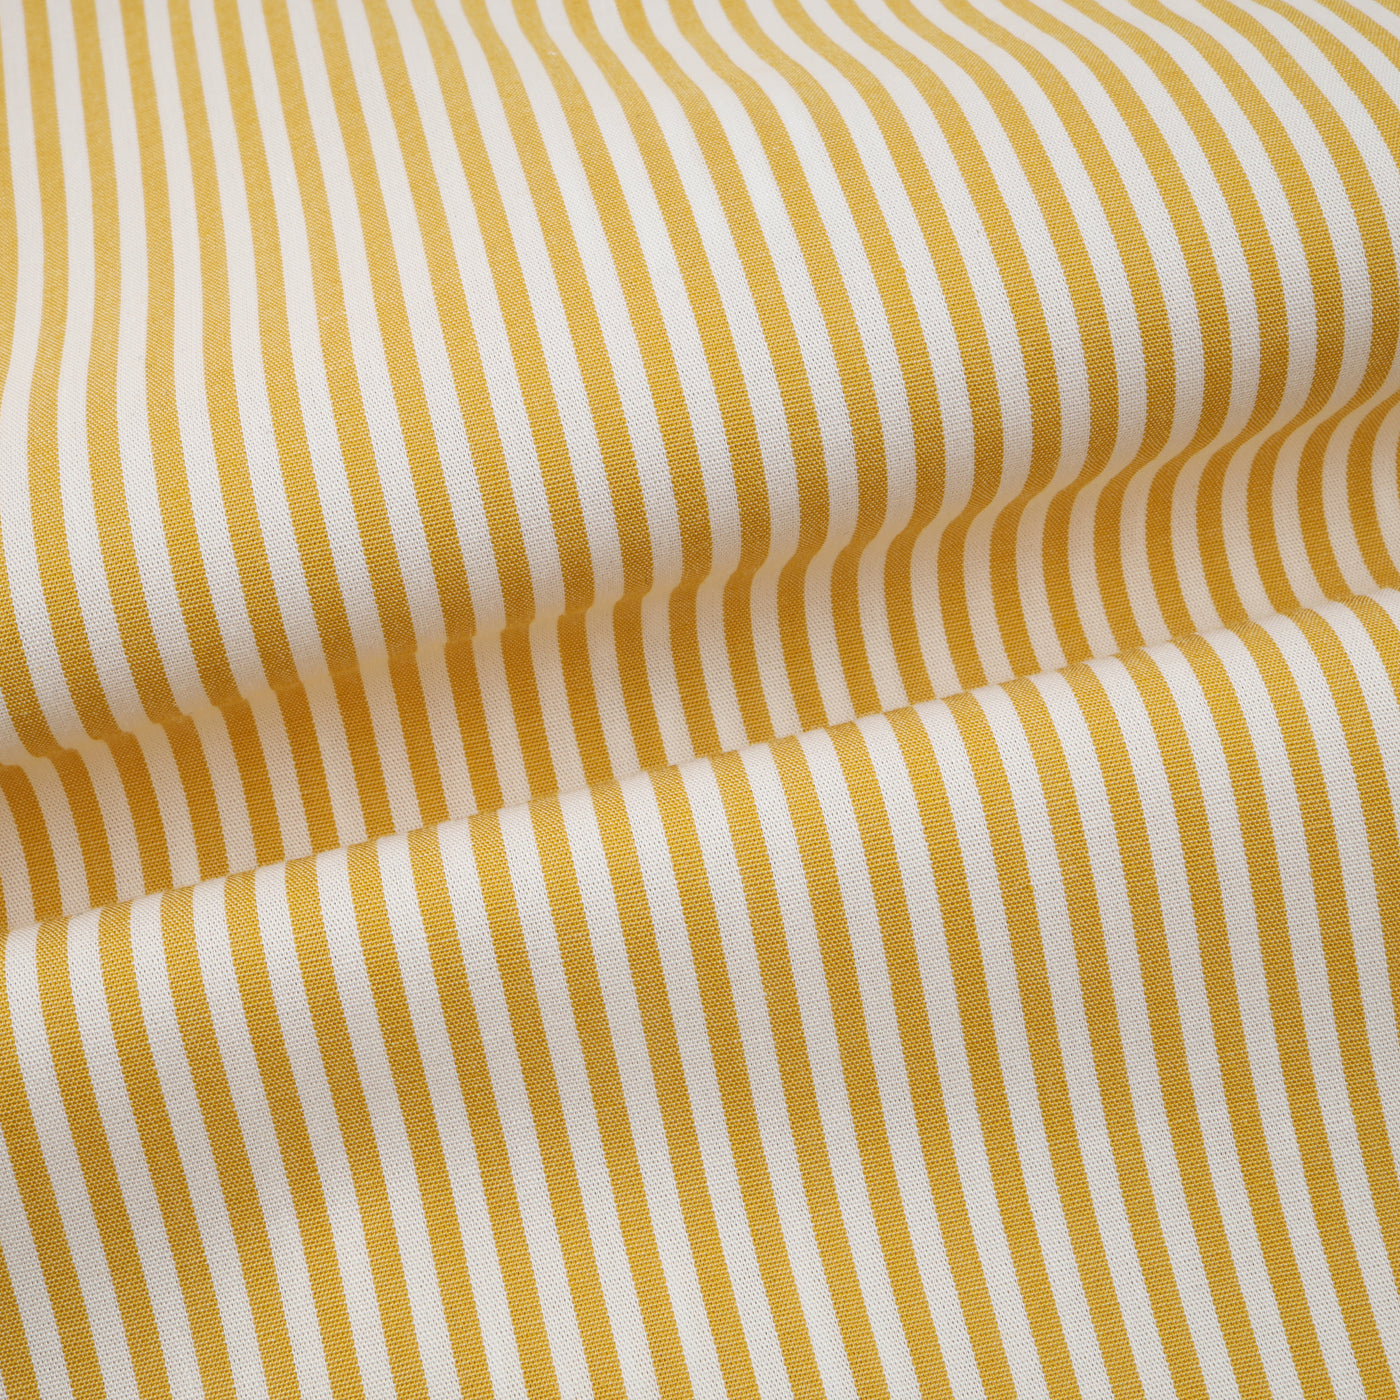 Striped Yellow & White Casual Shirt